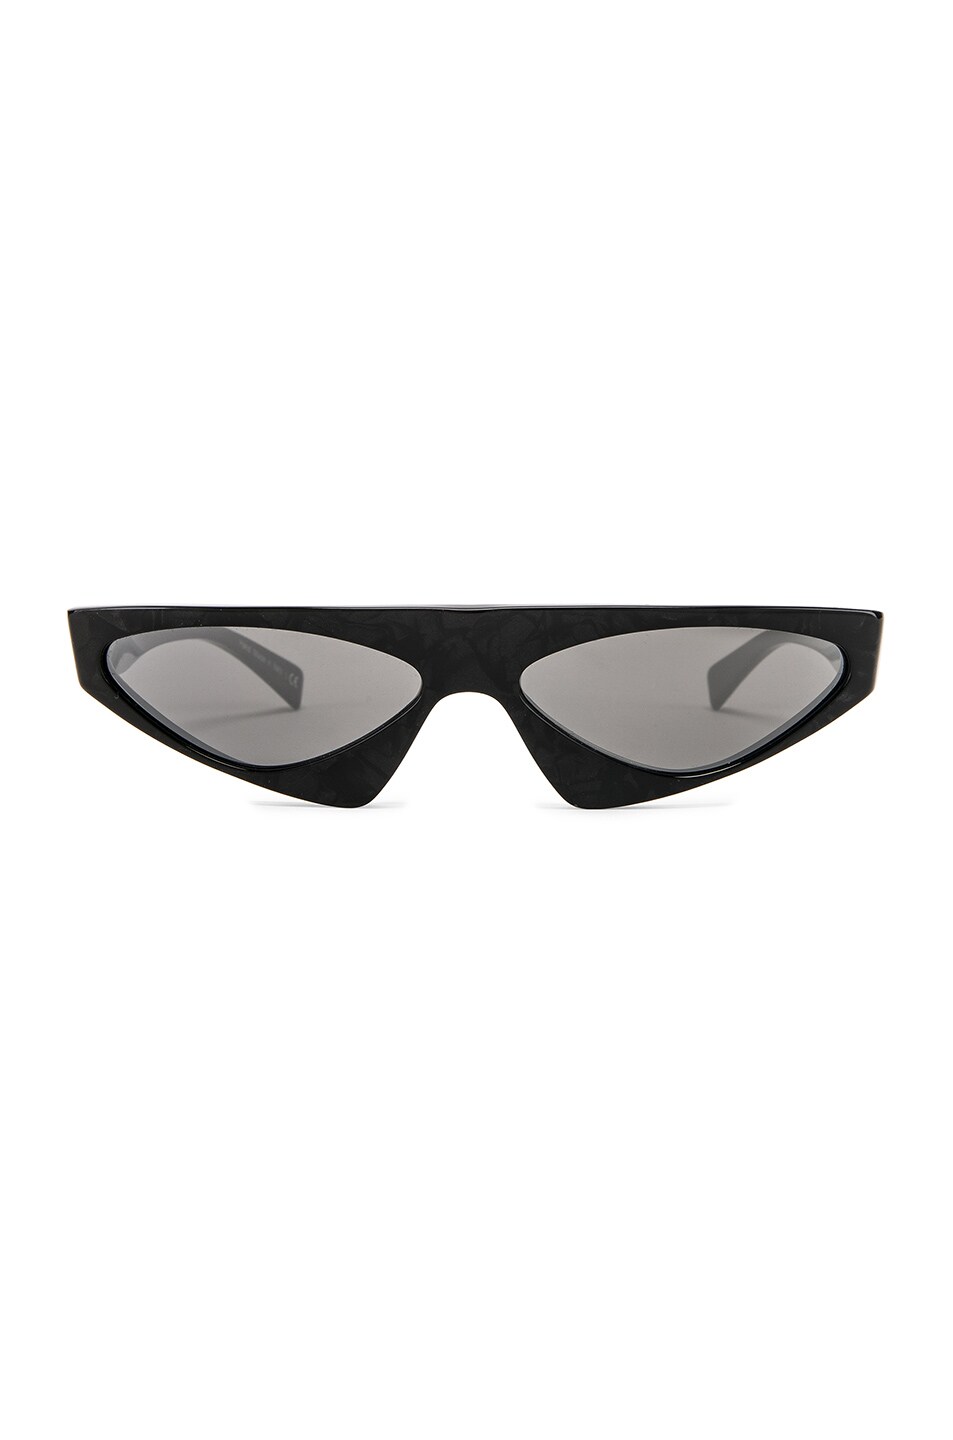 Image 1 of Oliver Peoples x Alain Mikli Josseline Sunglasses in Noir Mikli & Grey Silver Mirror